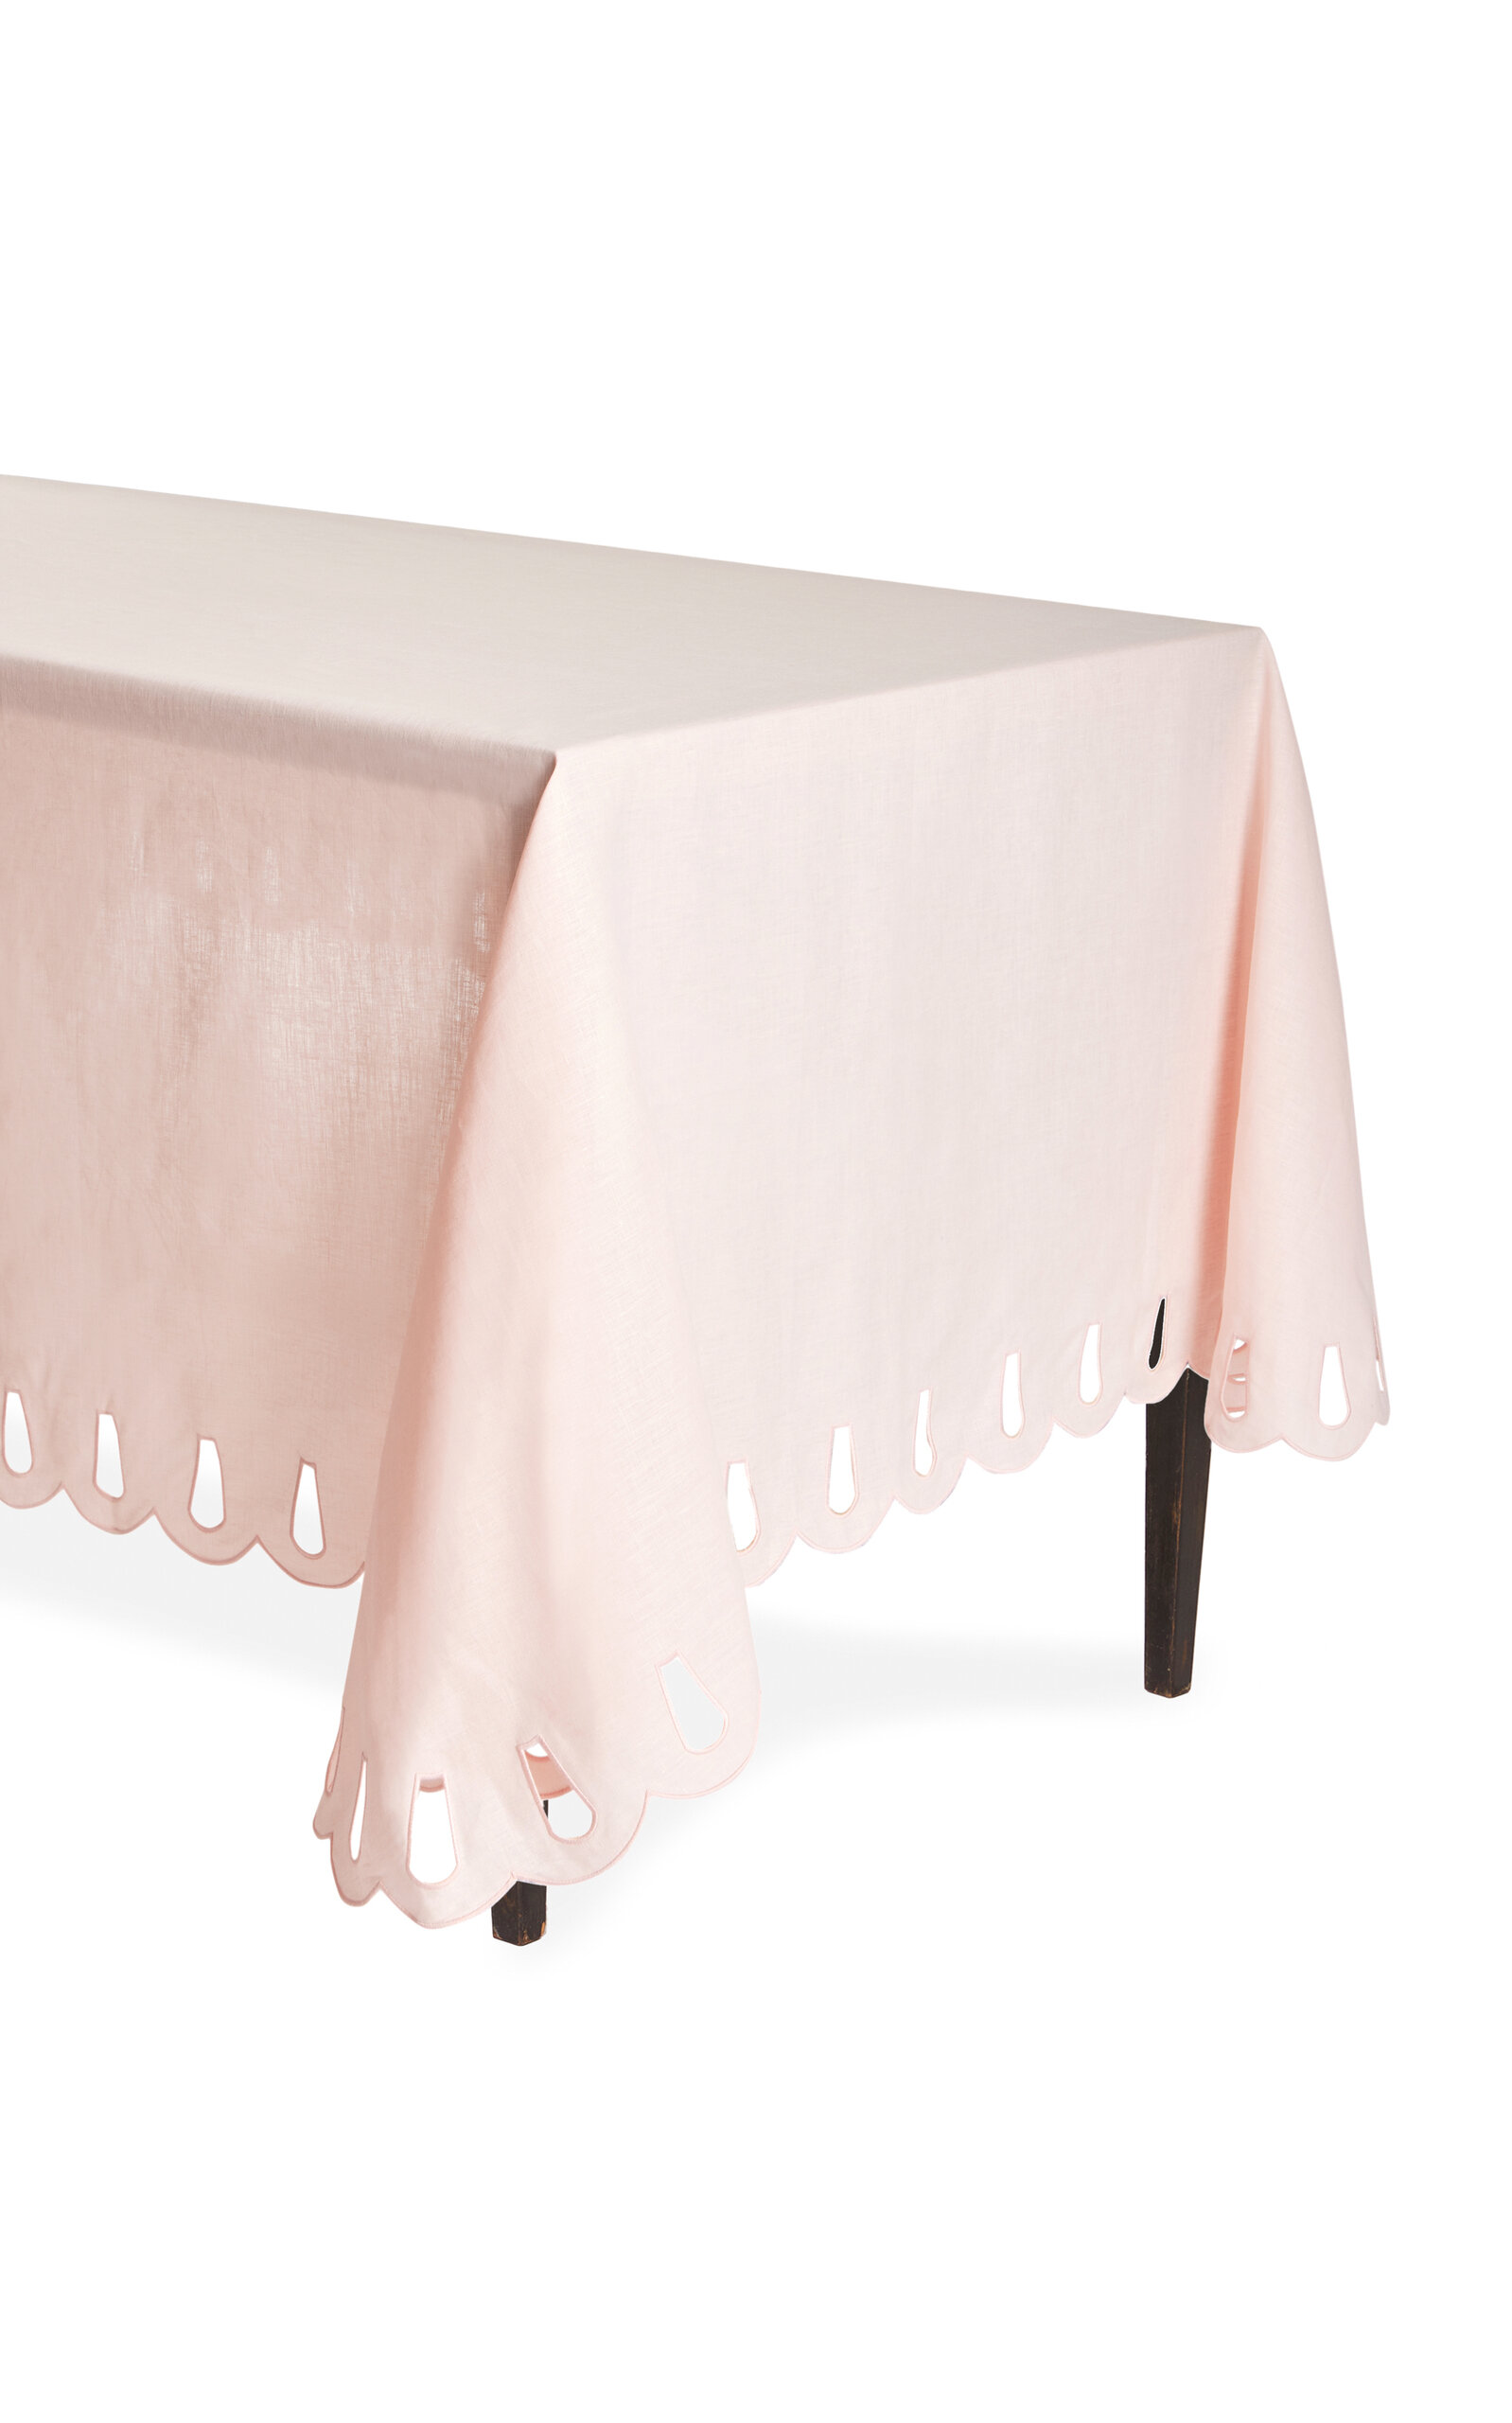 Moda Domus Rectangular Linen Tablecloth In Pink